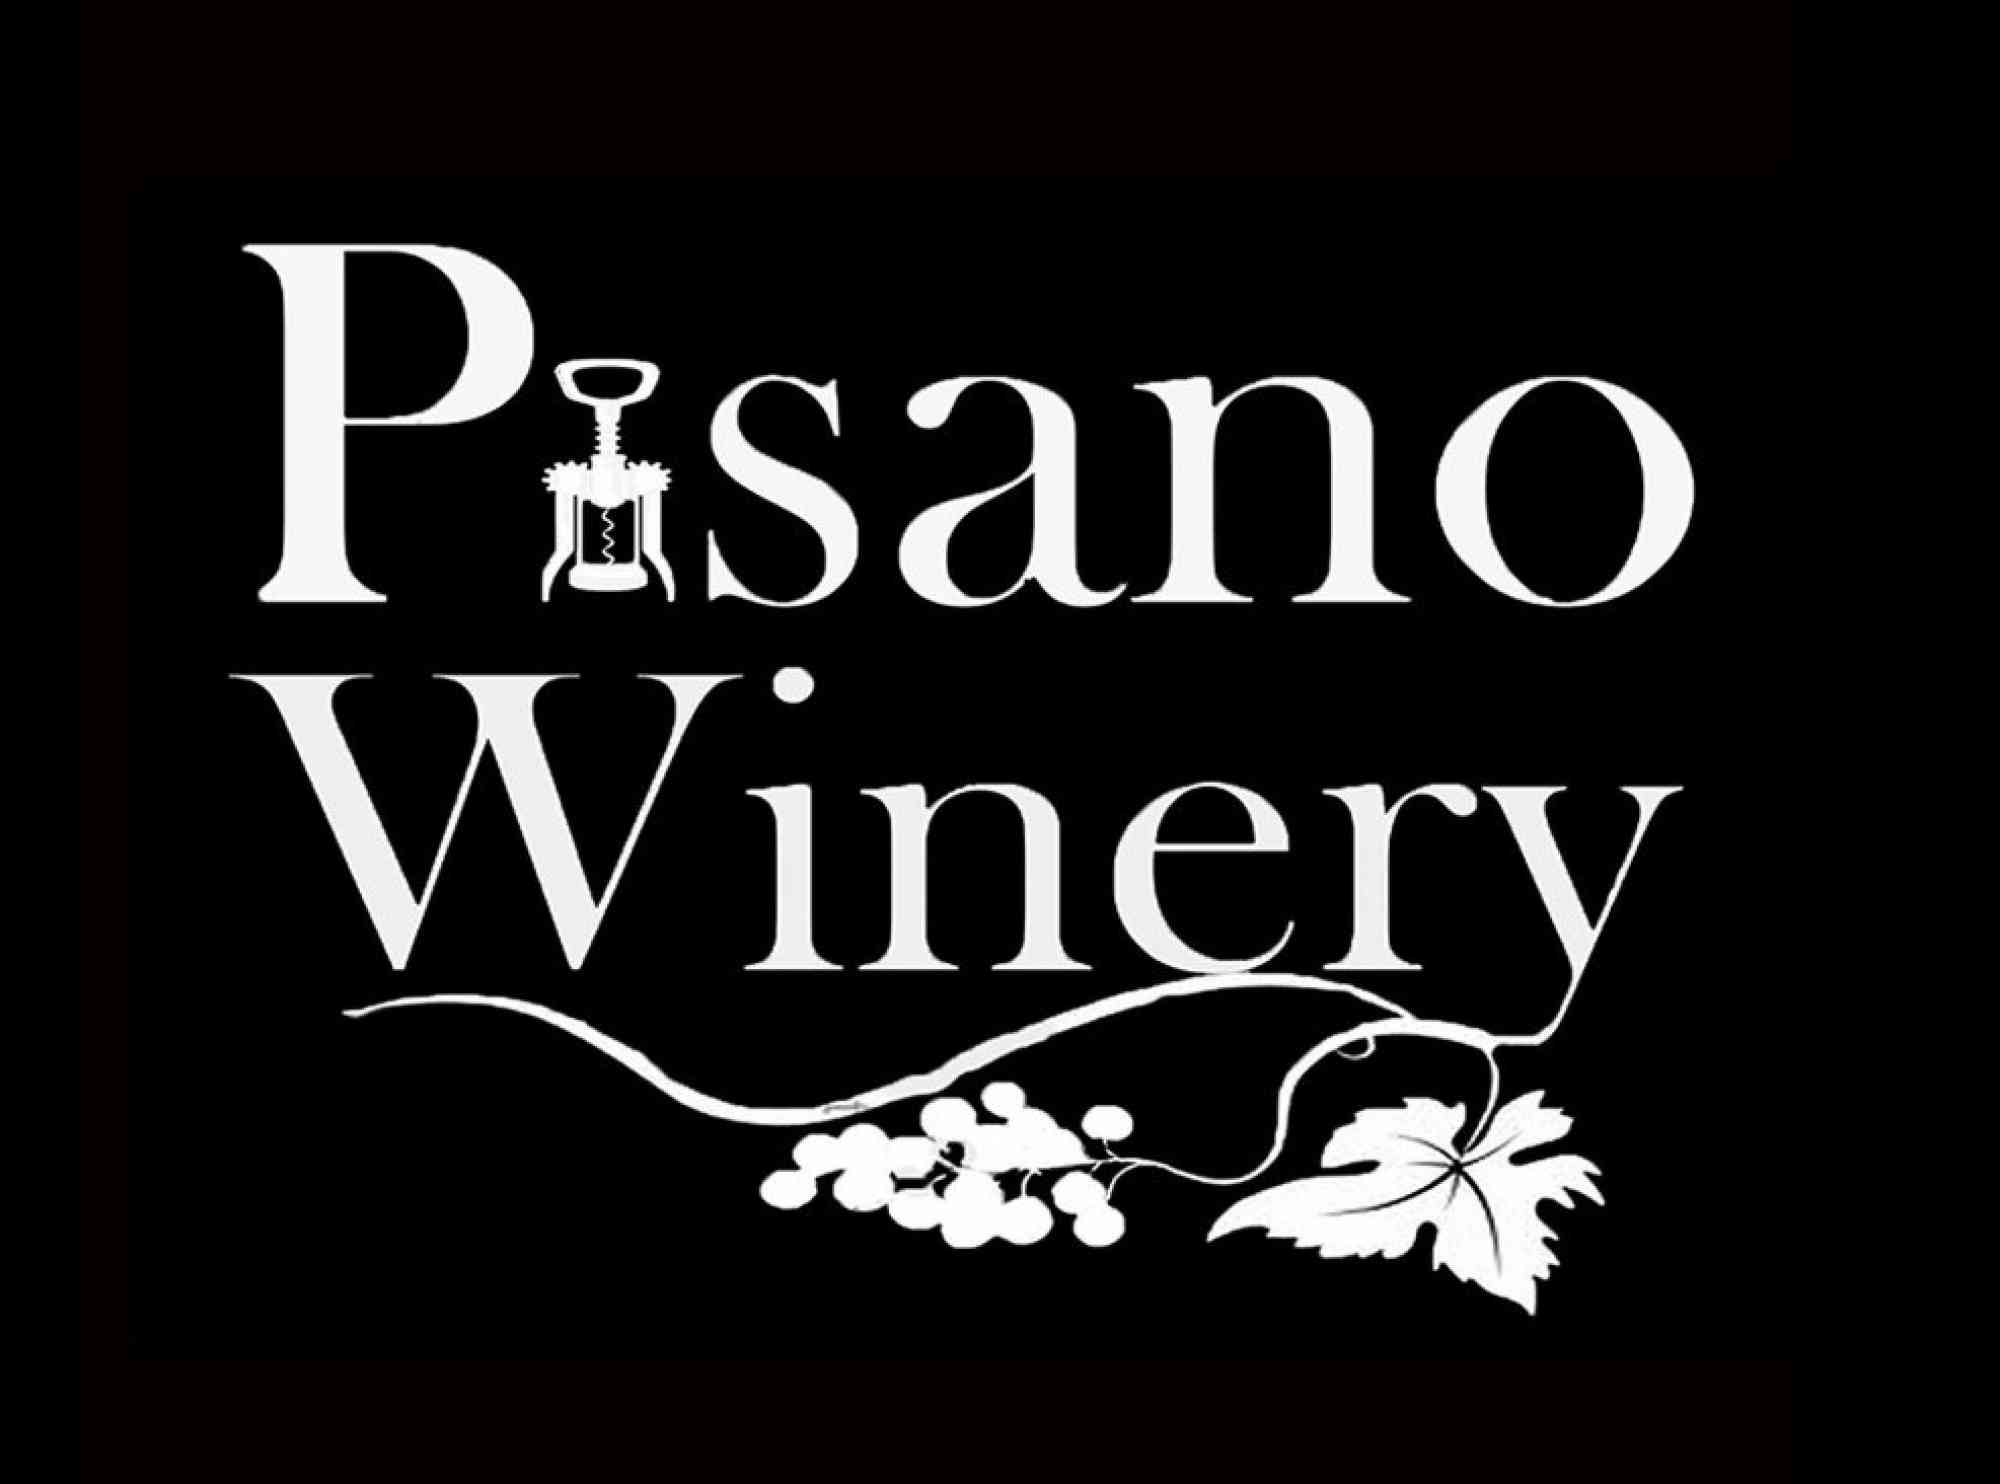 Pisano winery